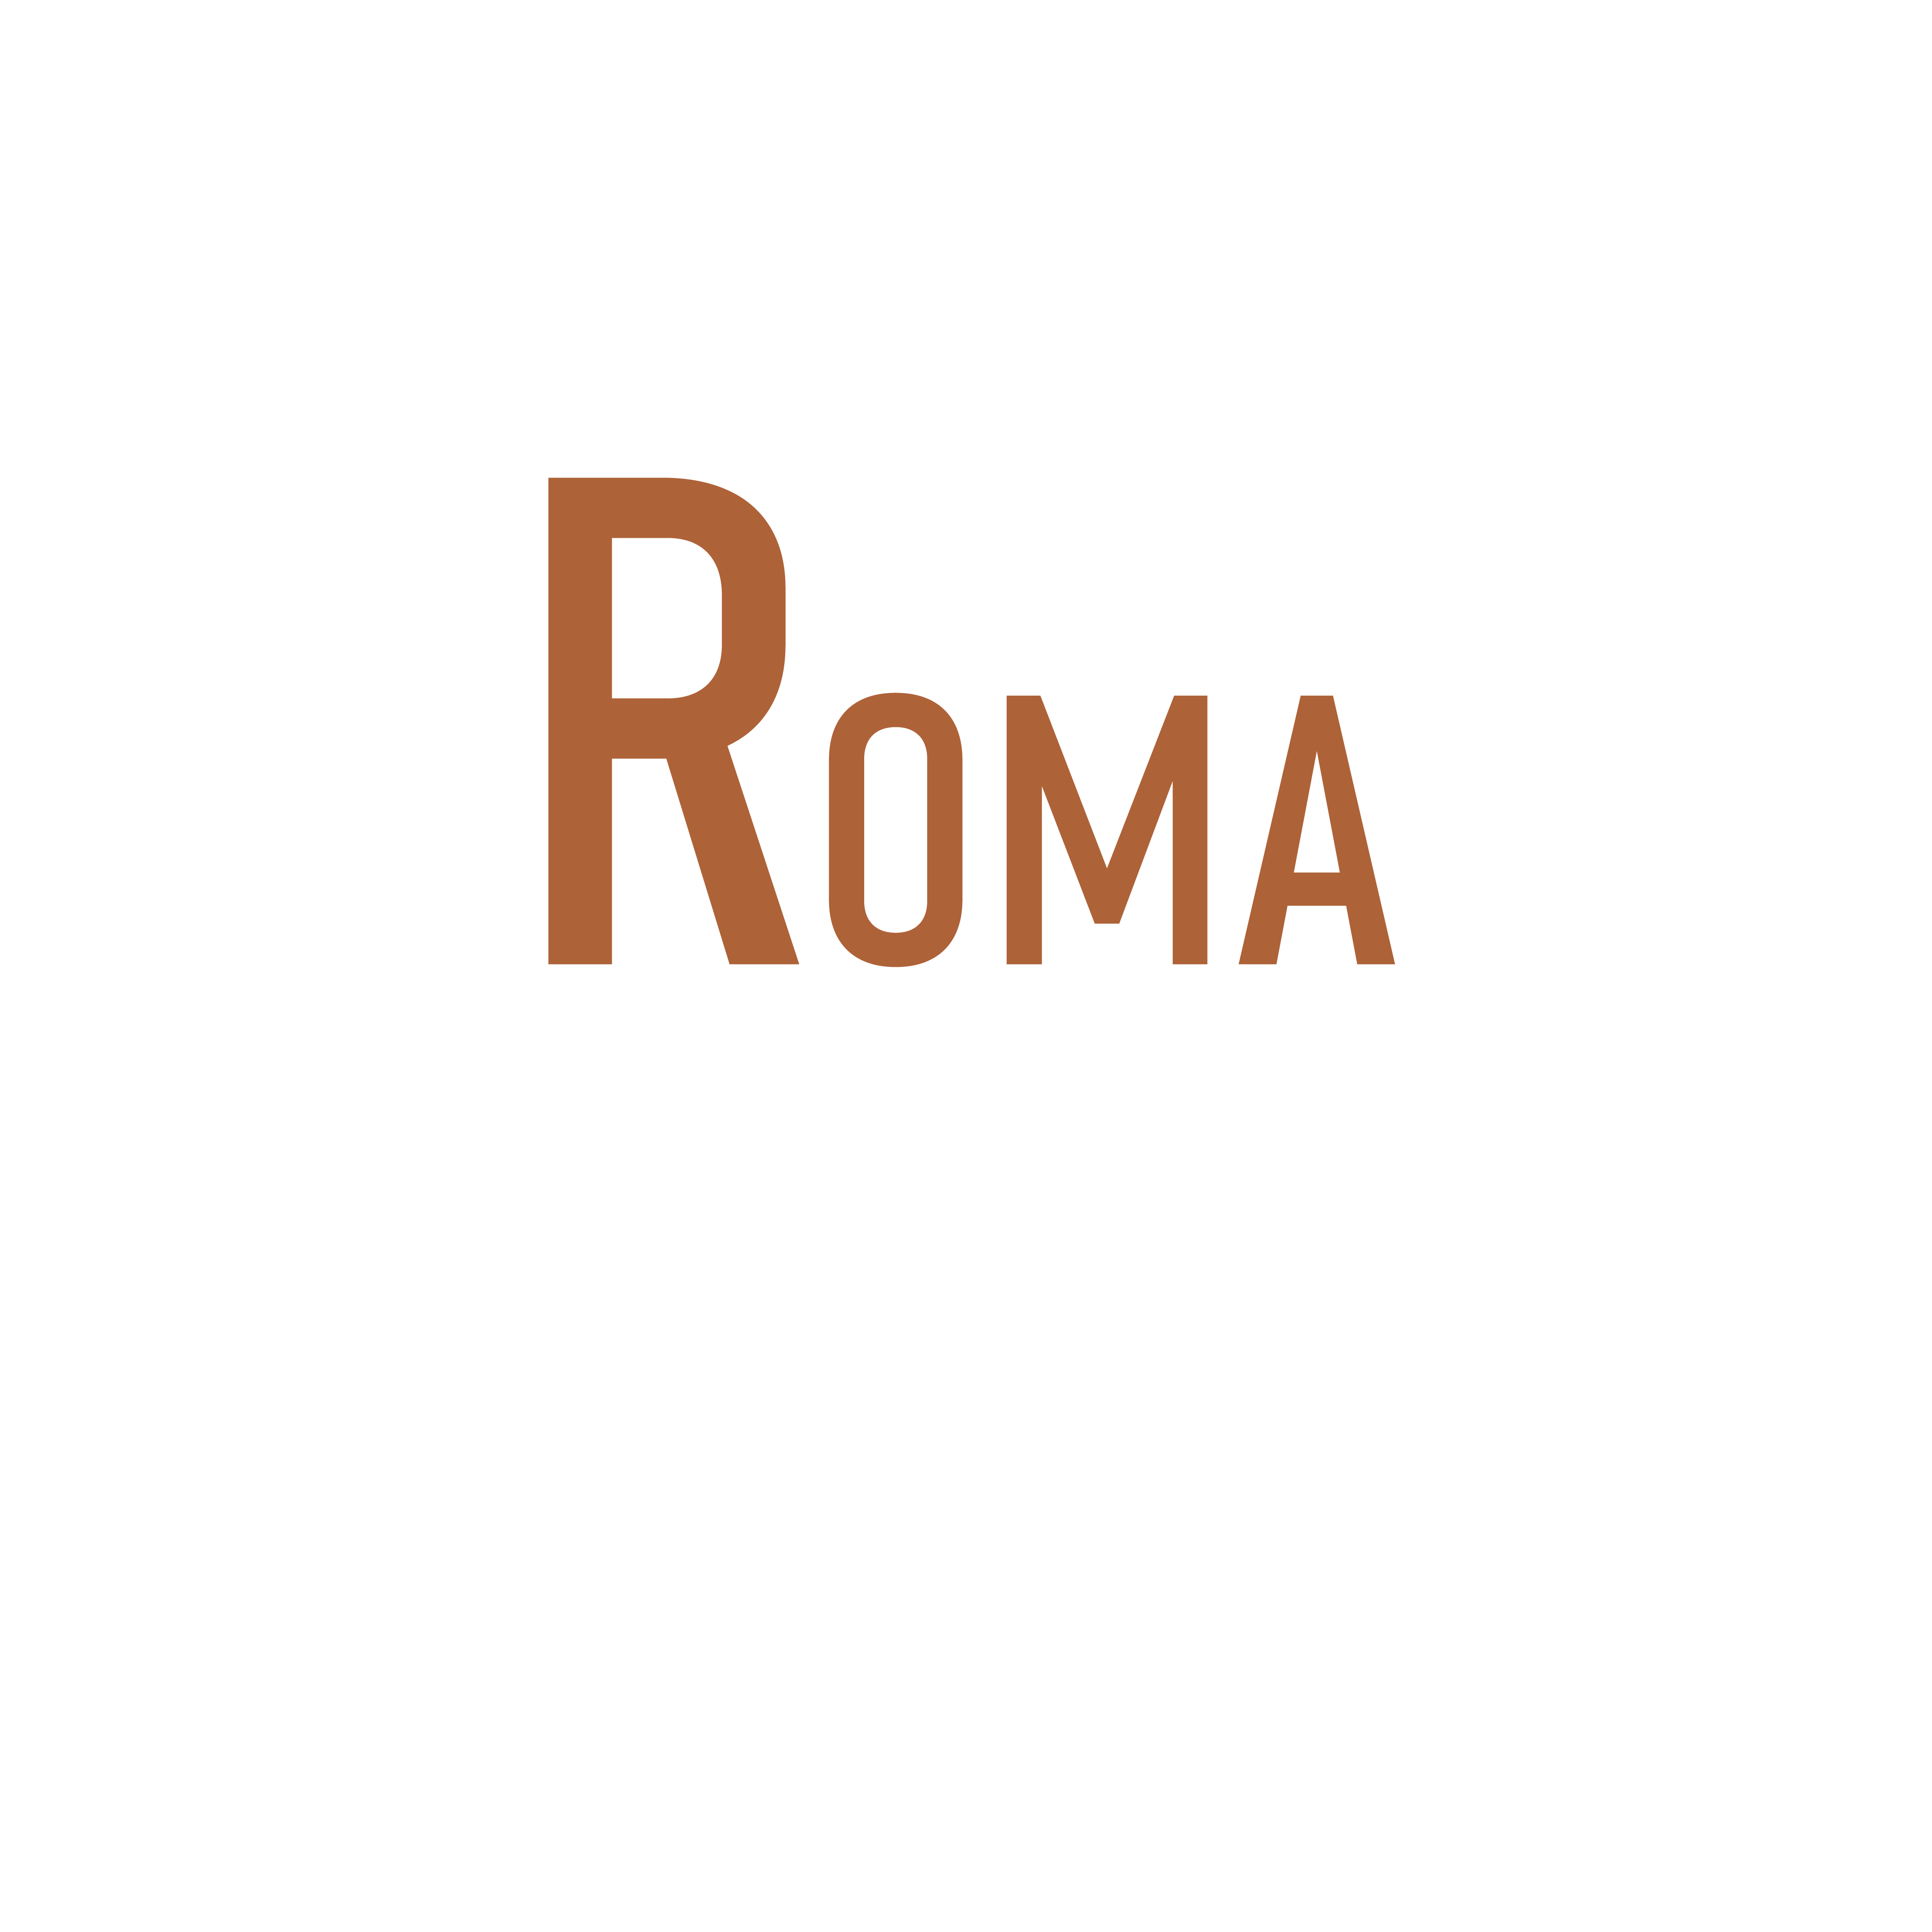 ROMA Consulting - IT